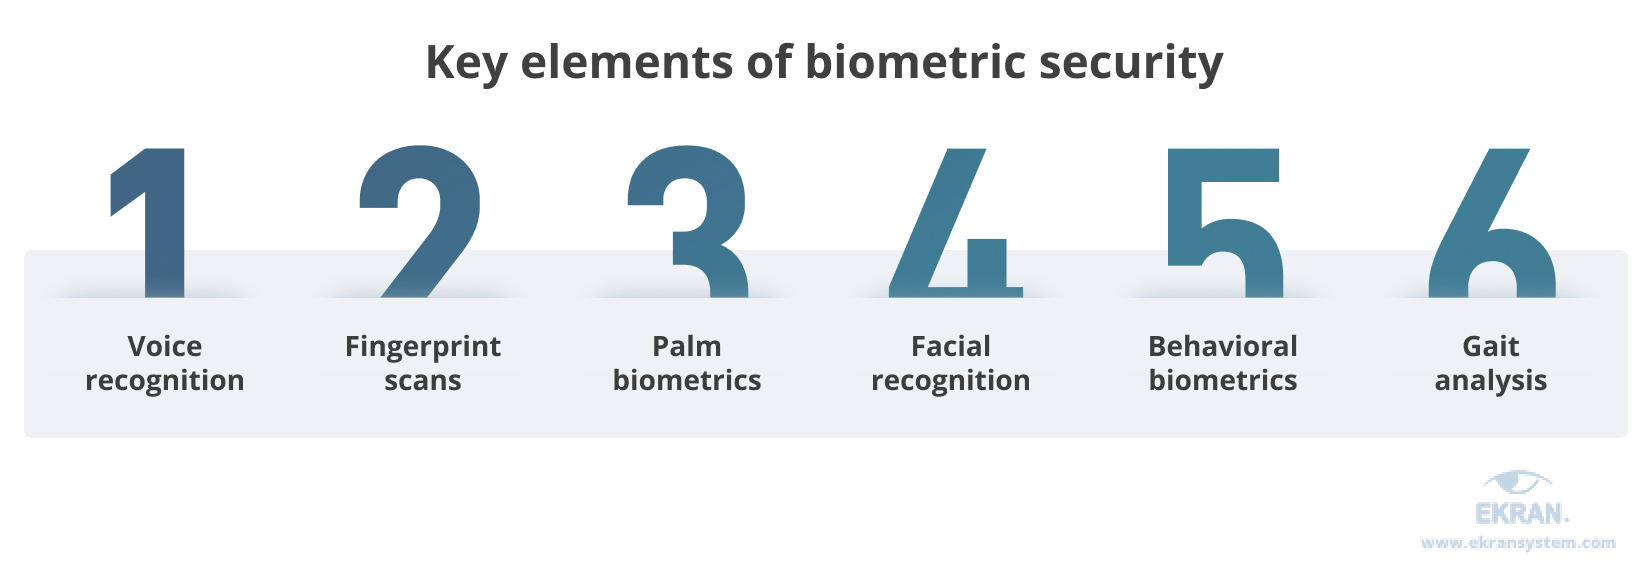 Key elements of biometric security